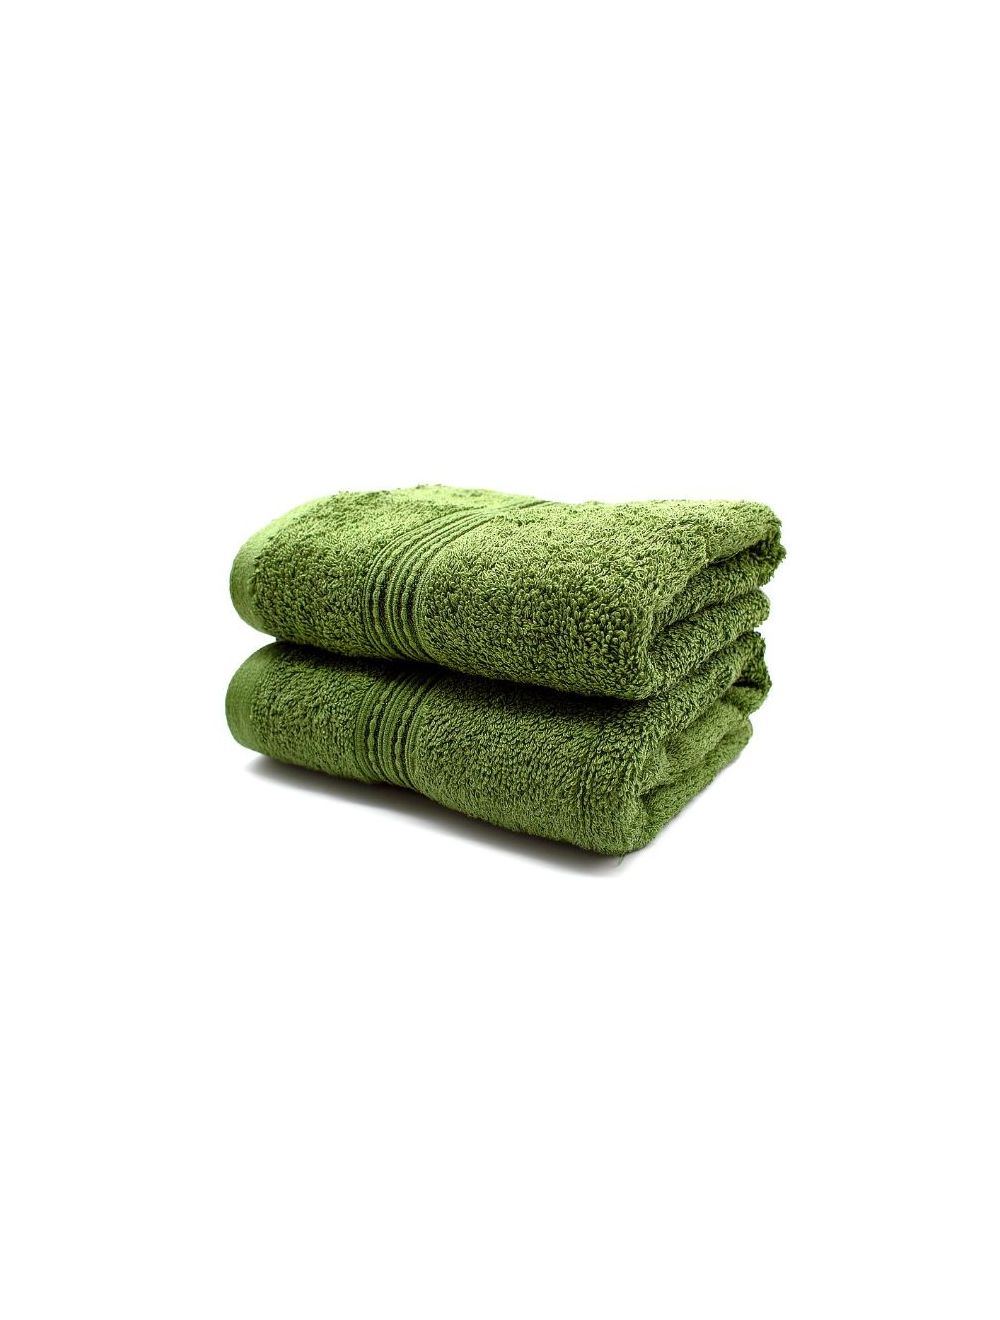 Rahalife 100% Cotton 2-Piece Hand Towel Set, Classic Collection, Green-14RLHT020